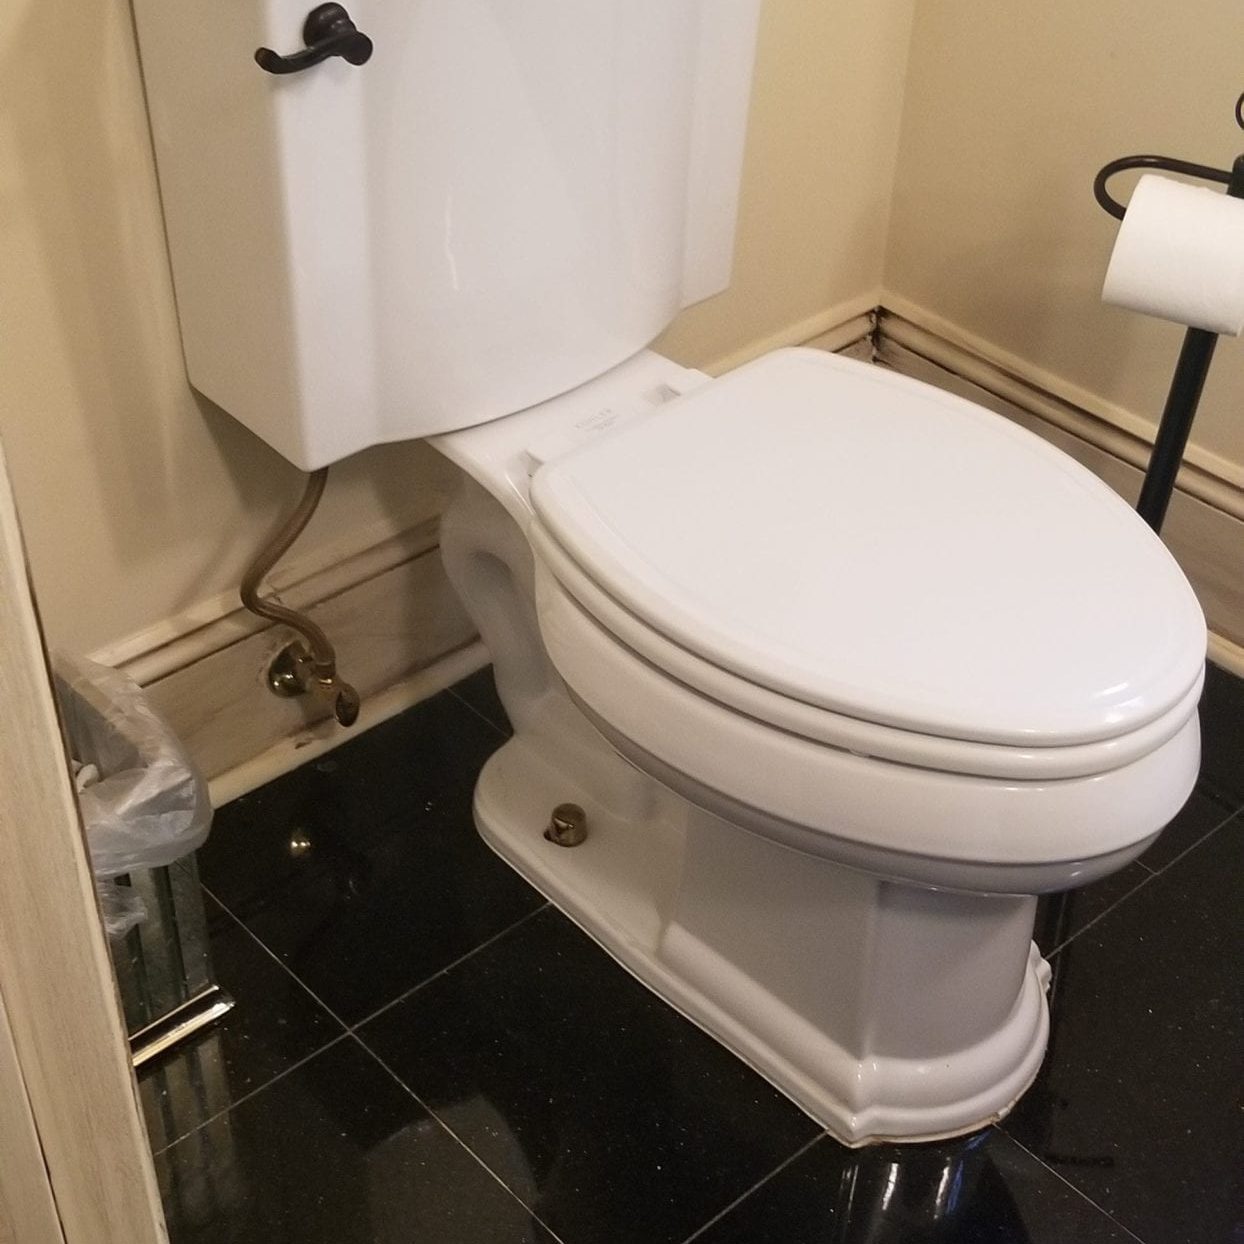 Toilet Repair In Milton, FL